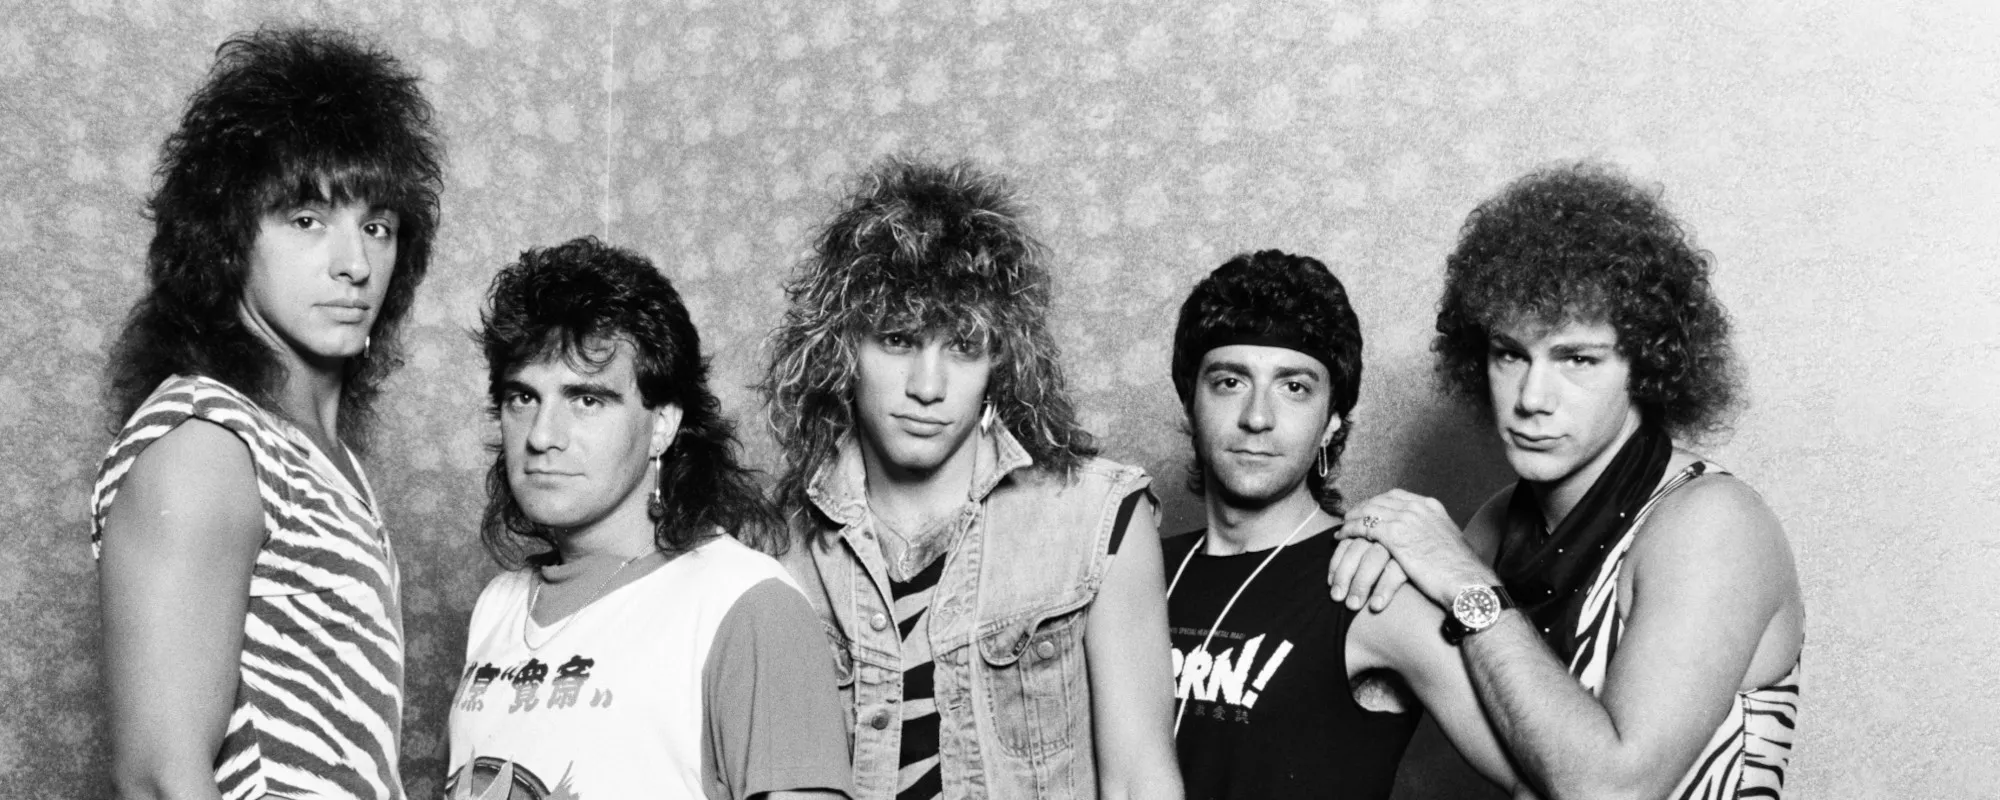 Richie Sambora Hints at Bon Jovi Reunion: “We’re Talking a Bit”